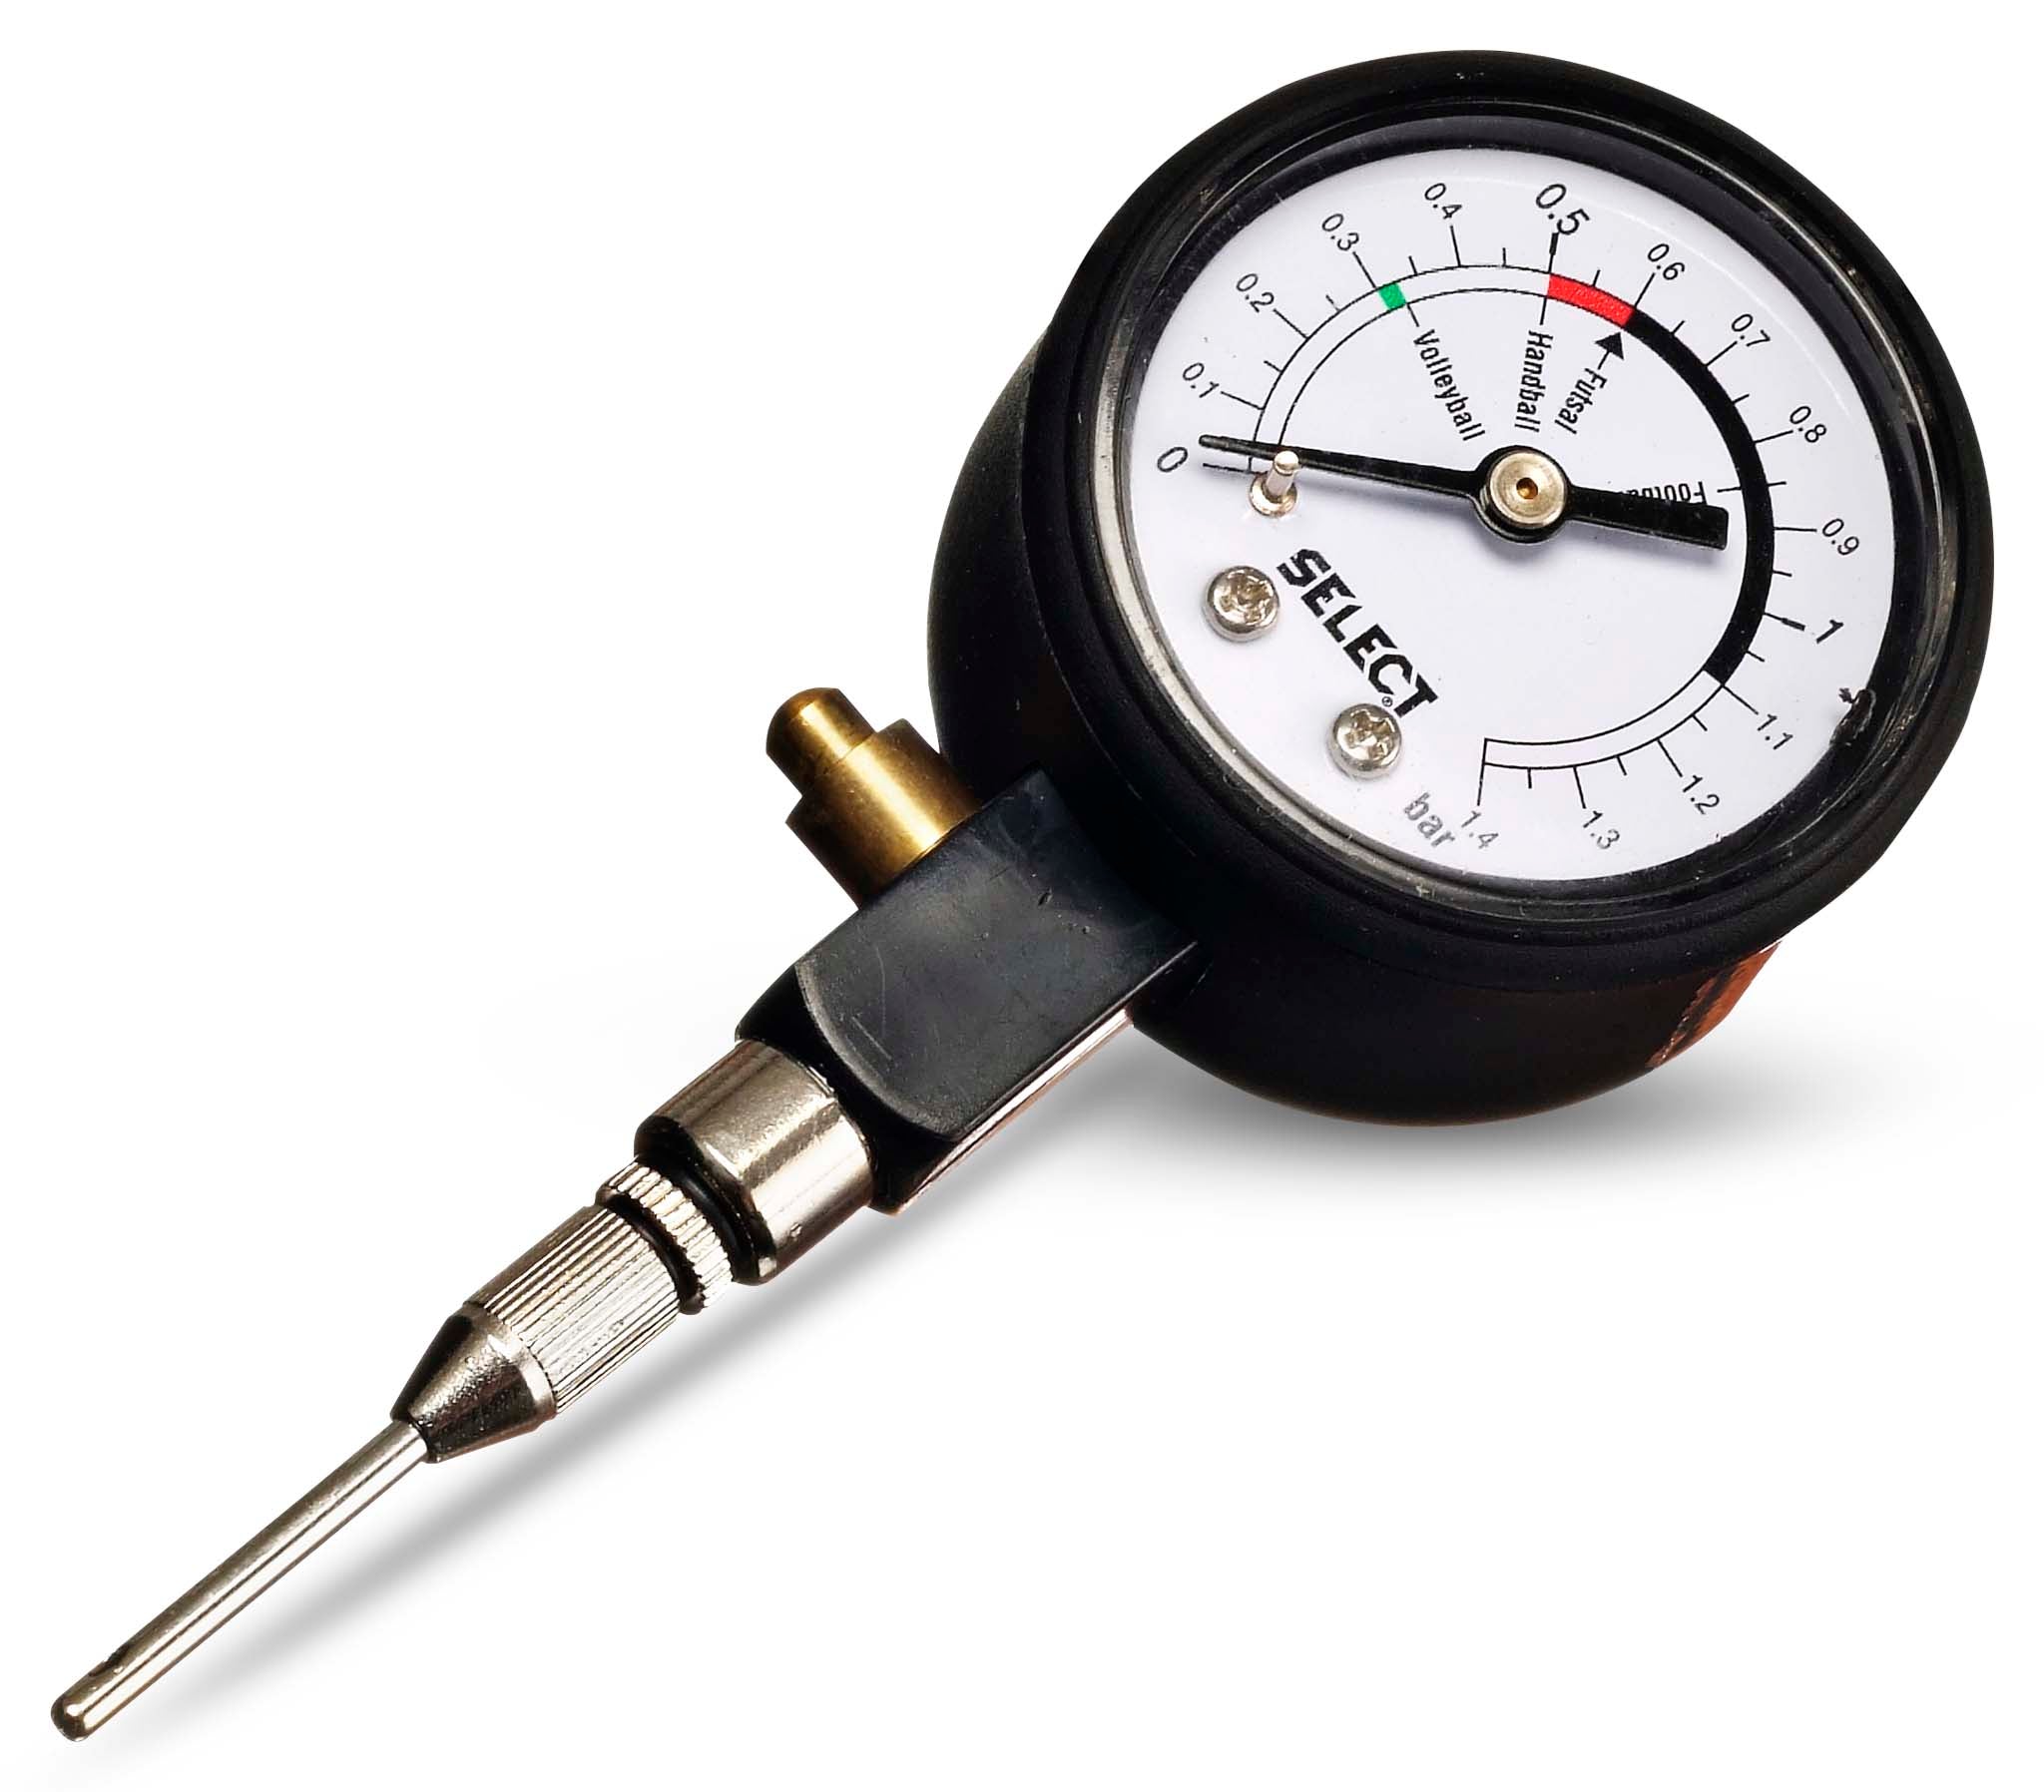 Pressure gauge analogue